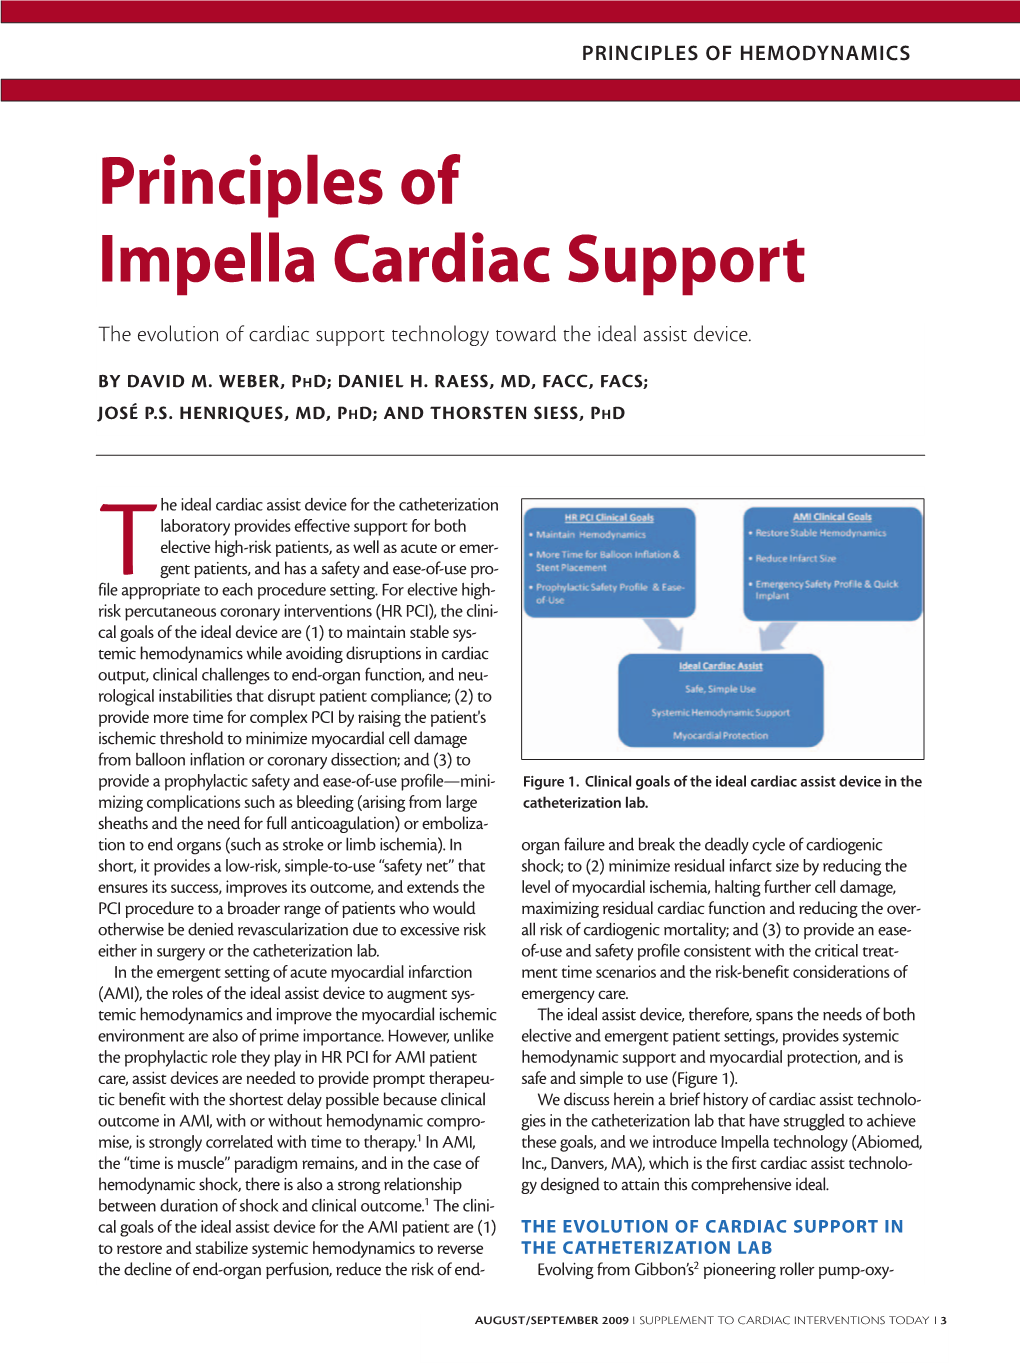 Principles of Impella Cardiac Support